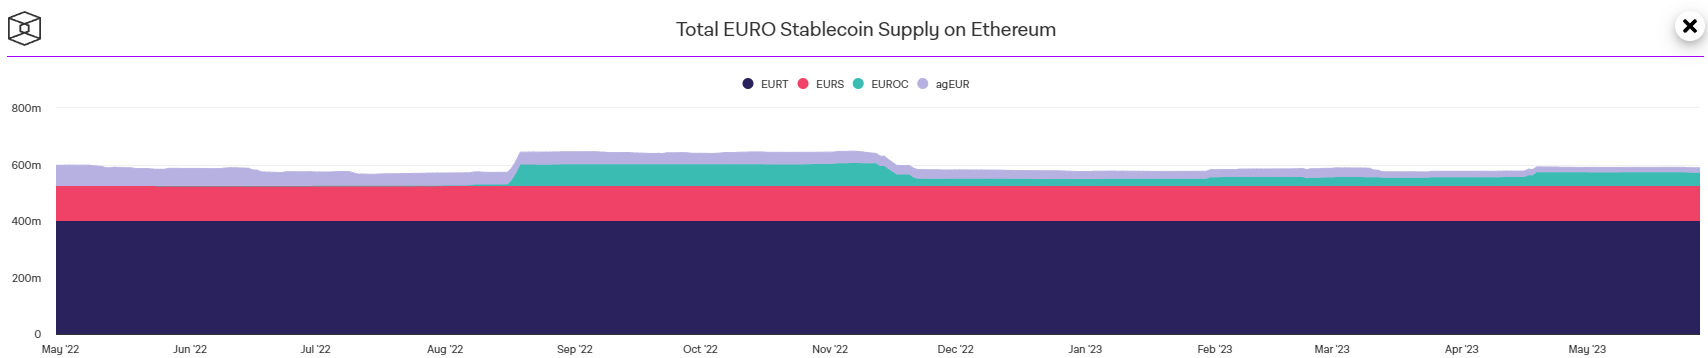 euro stablecoins